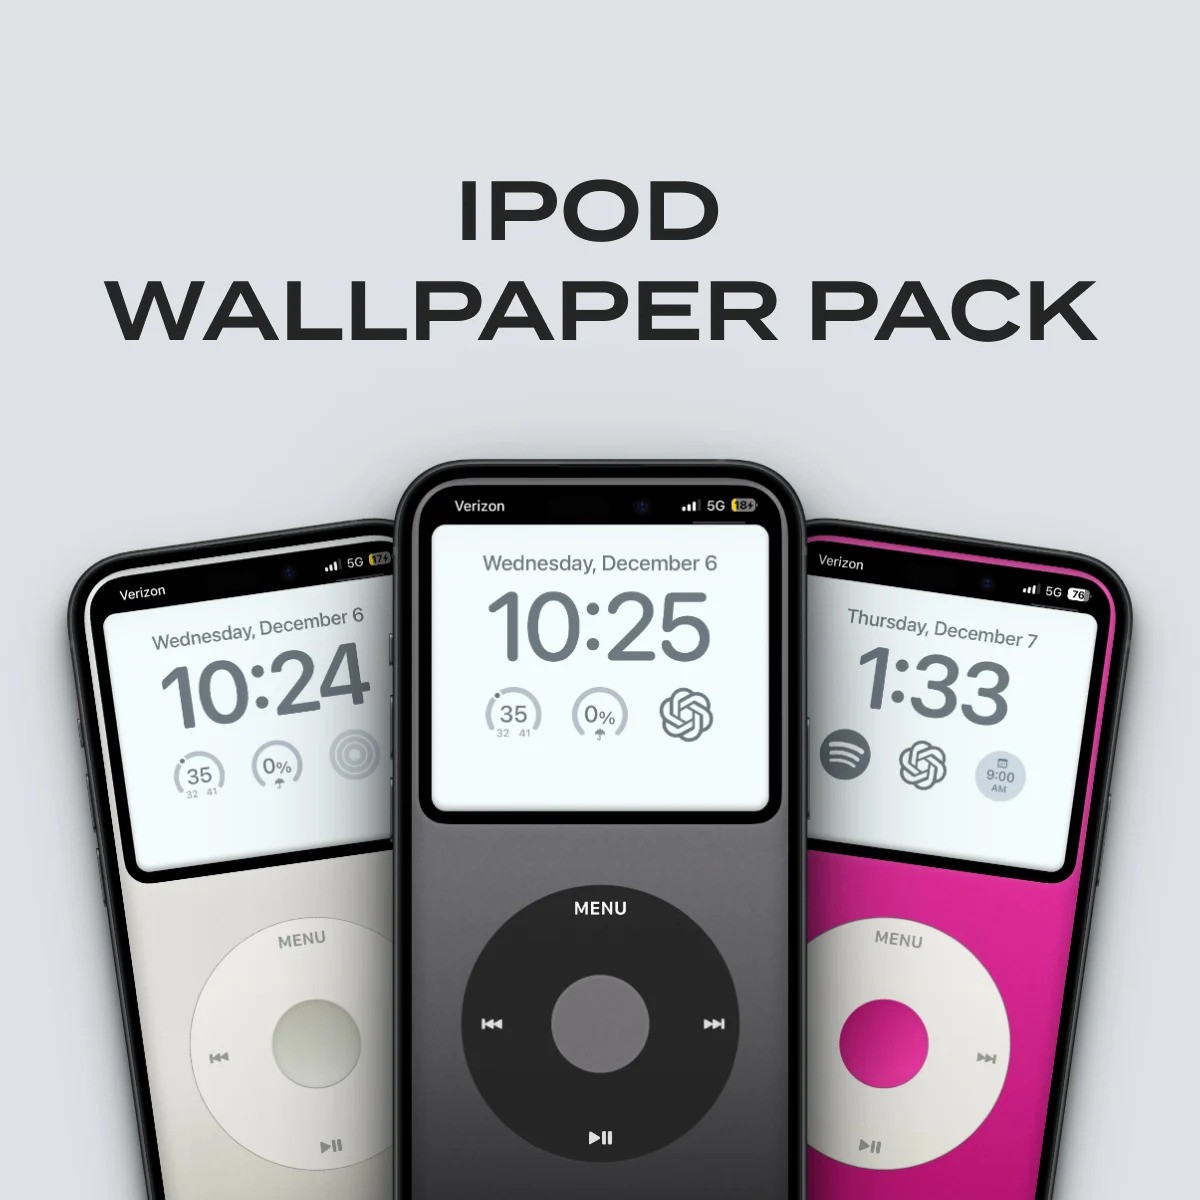 Oliur/Ultralinx Ipod Wallpaper Pack